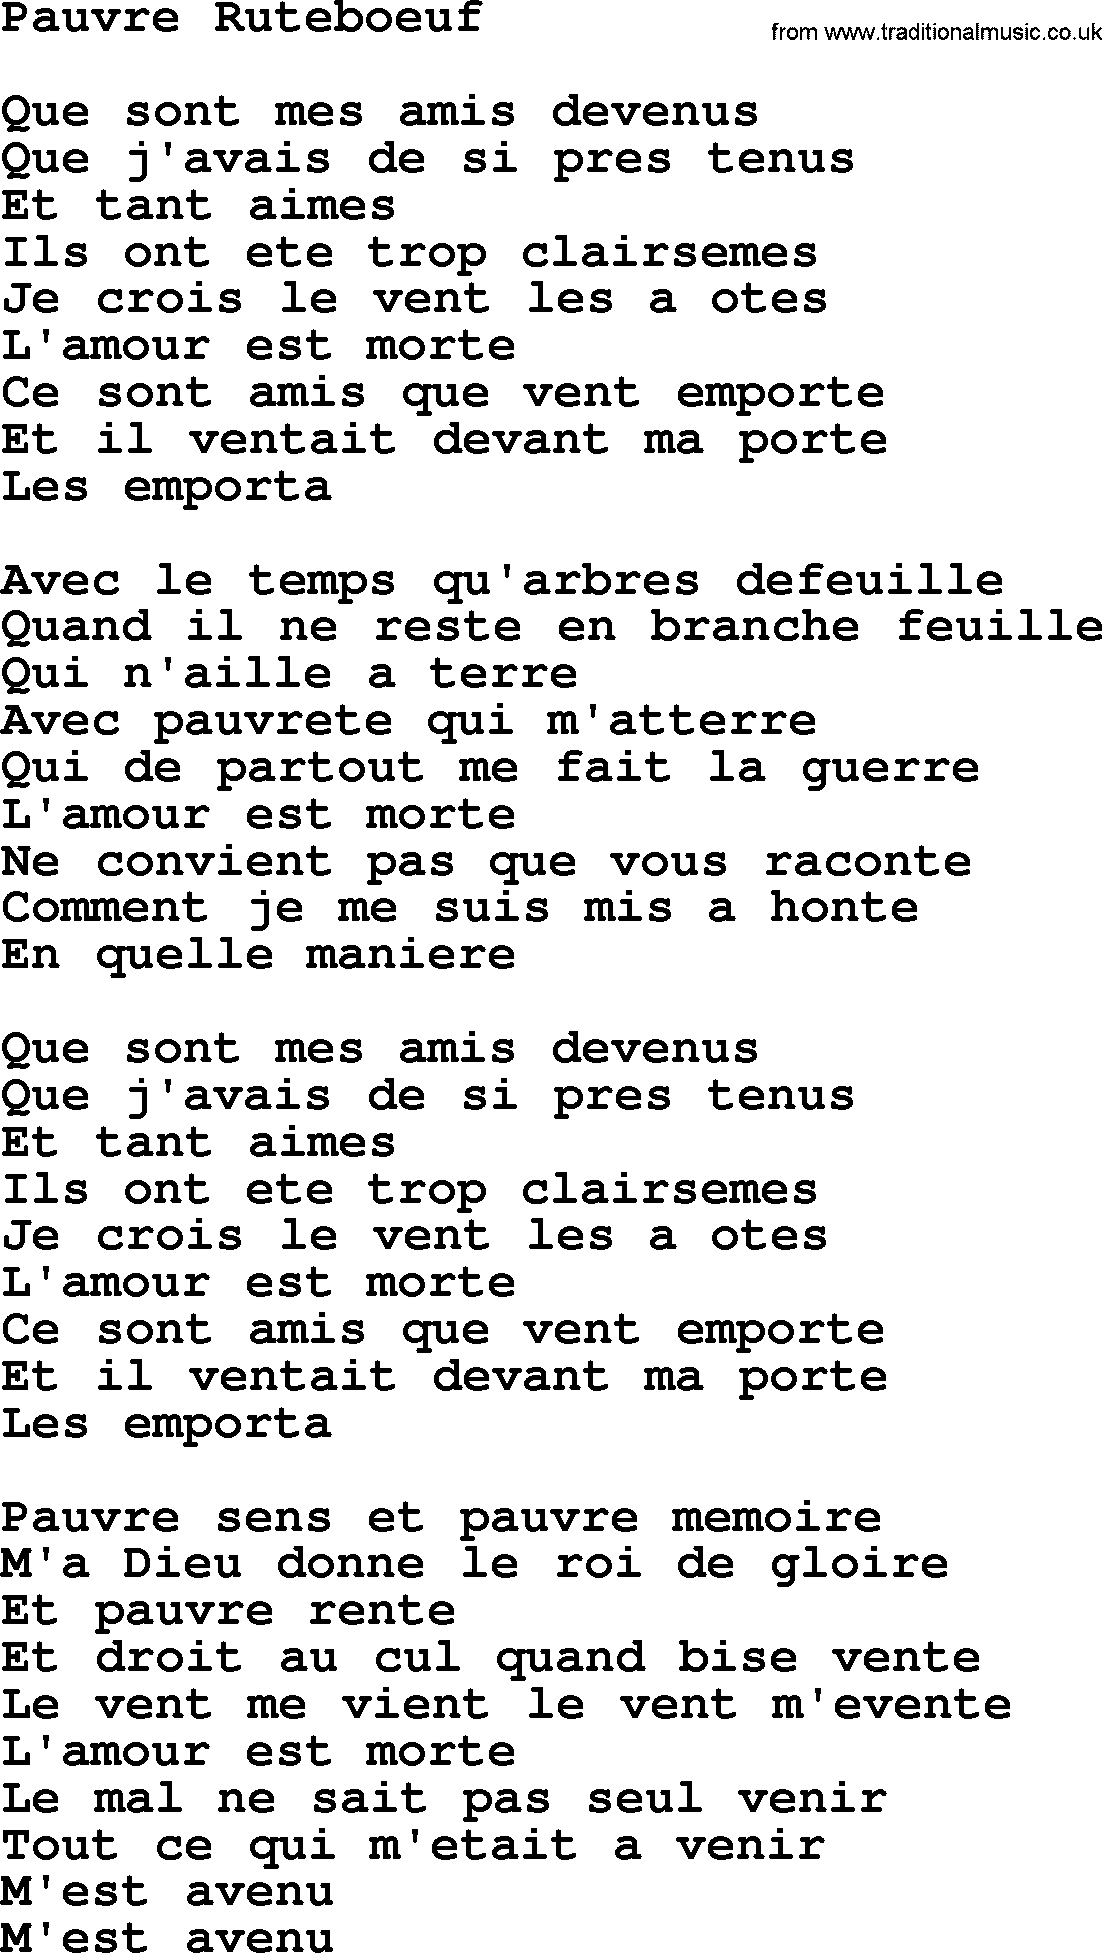 Joan Baez song Pauvre Ruteboeuf, lyrics